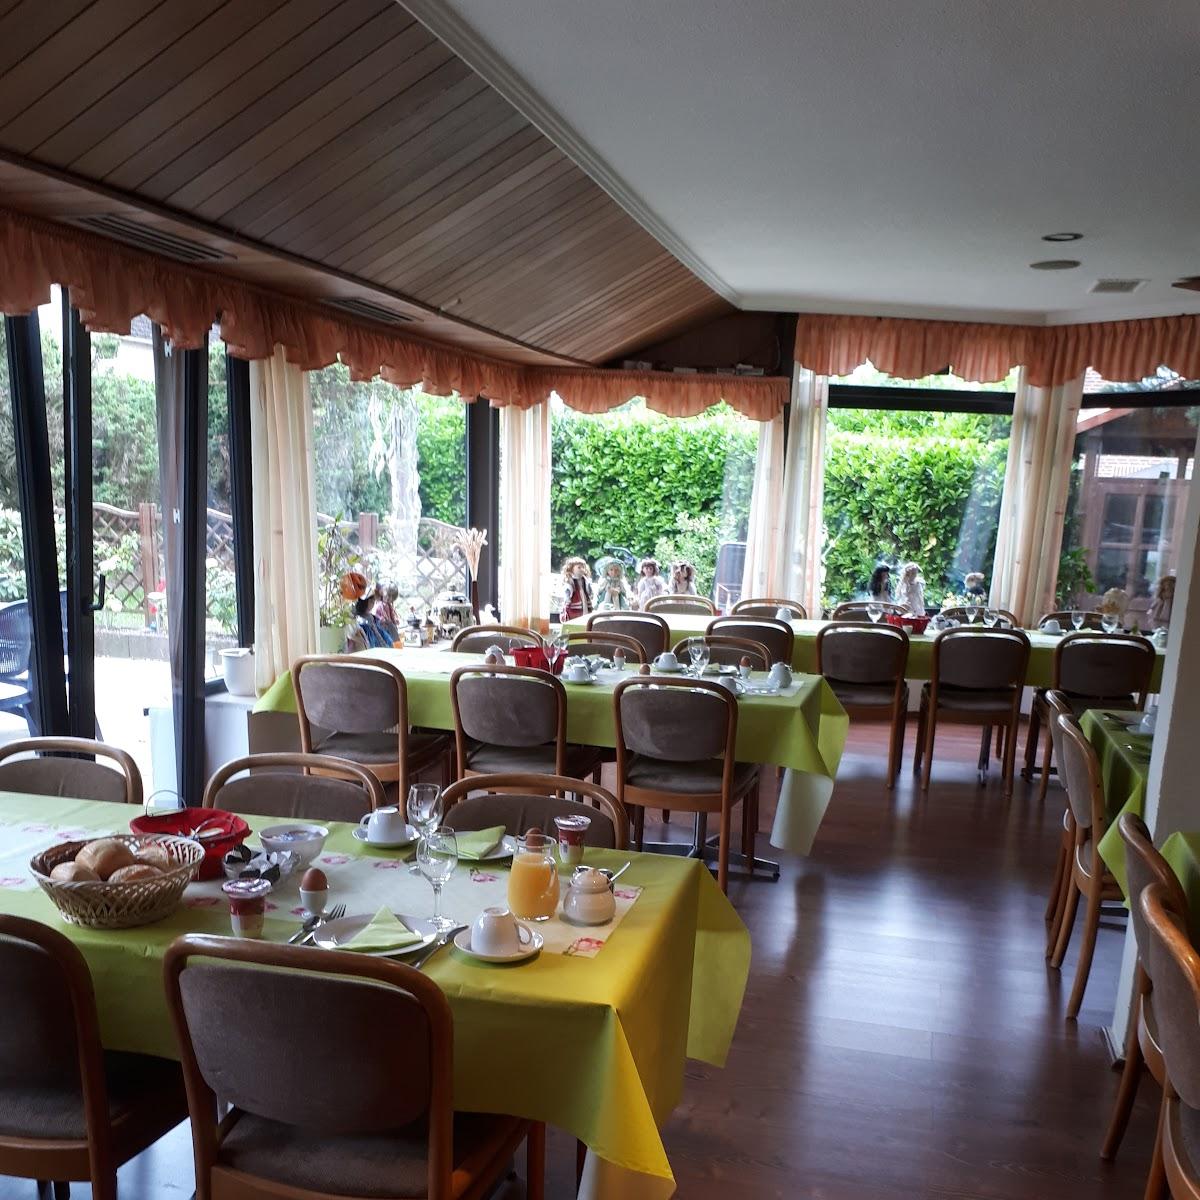 Restaurant "Pension Strohm im Lieth-Cafe" in Bad Fallingbostel